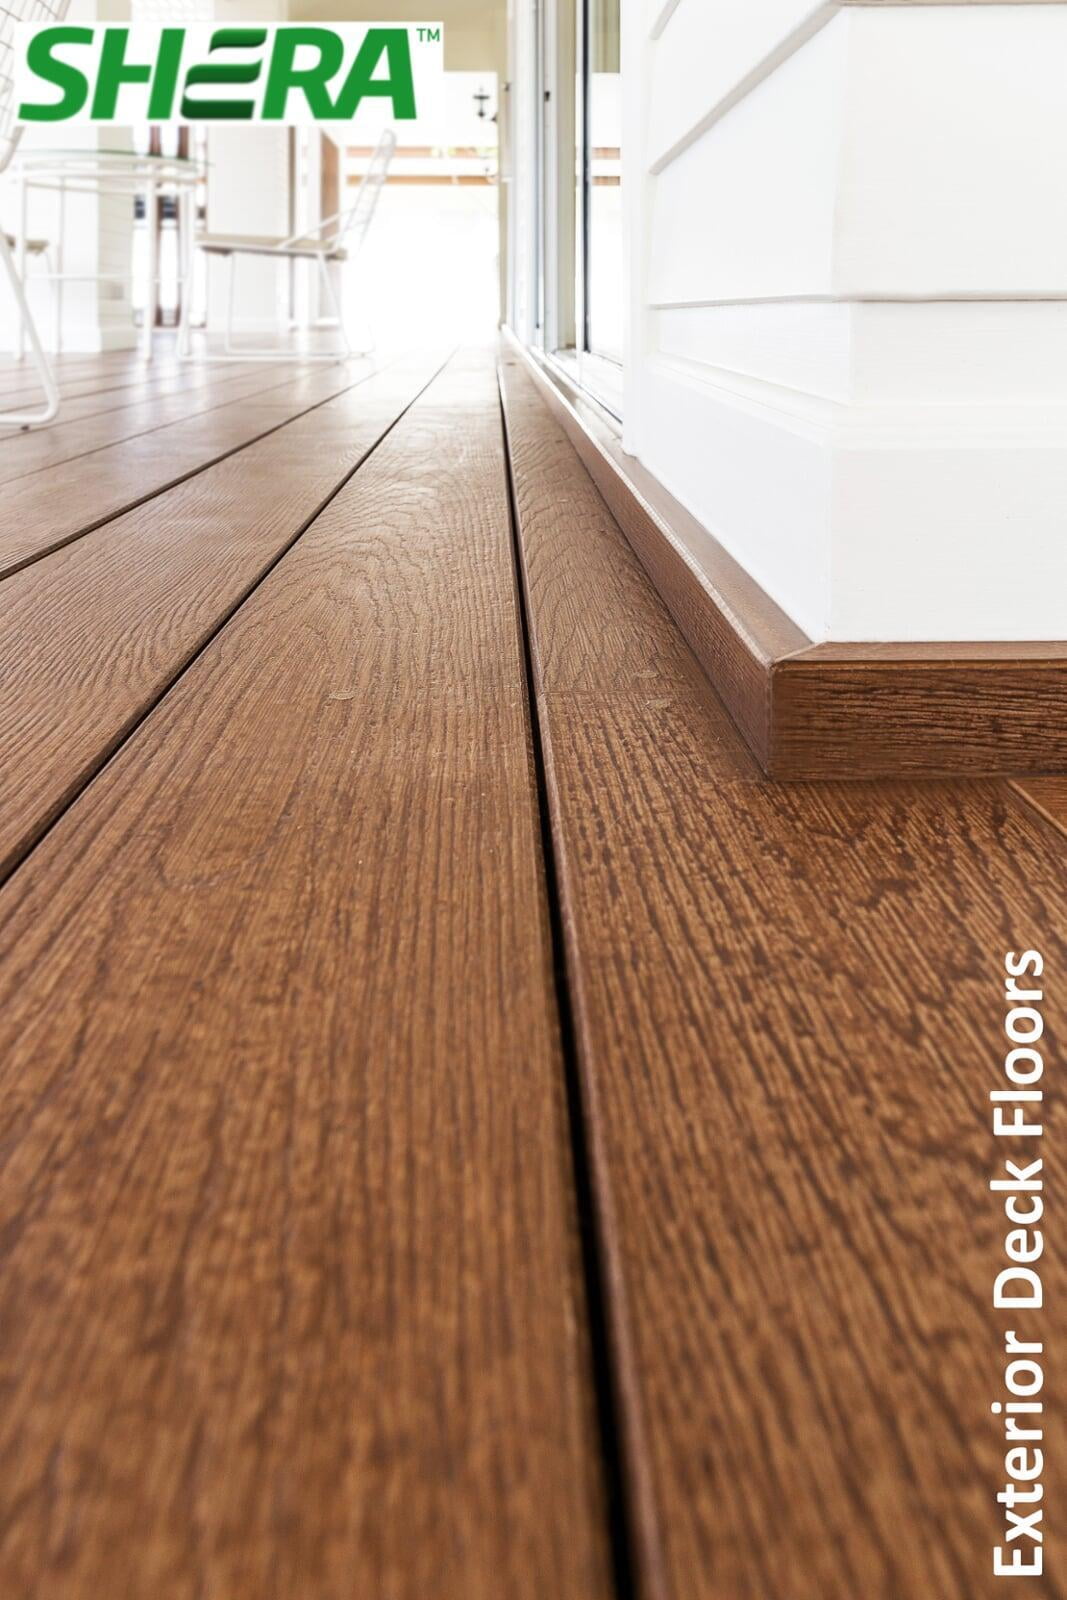 SHERA fiber cement floor planks for exterior decking solutions